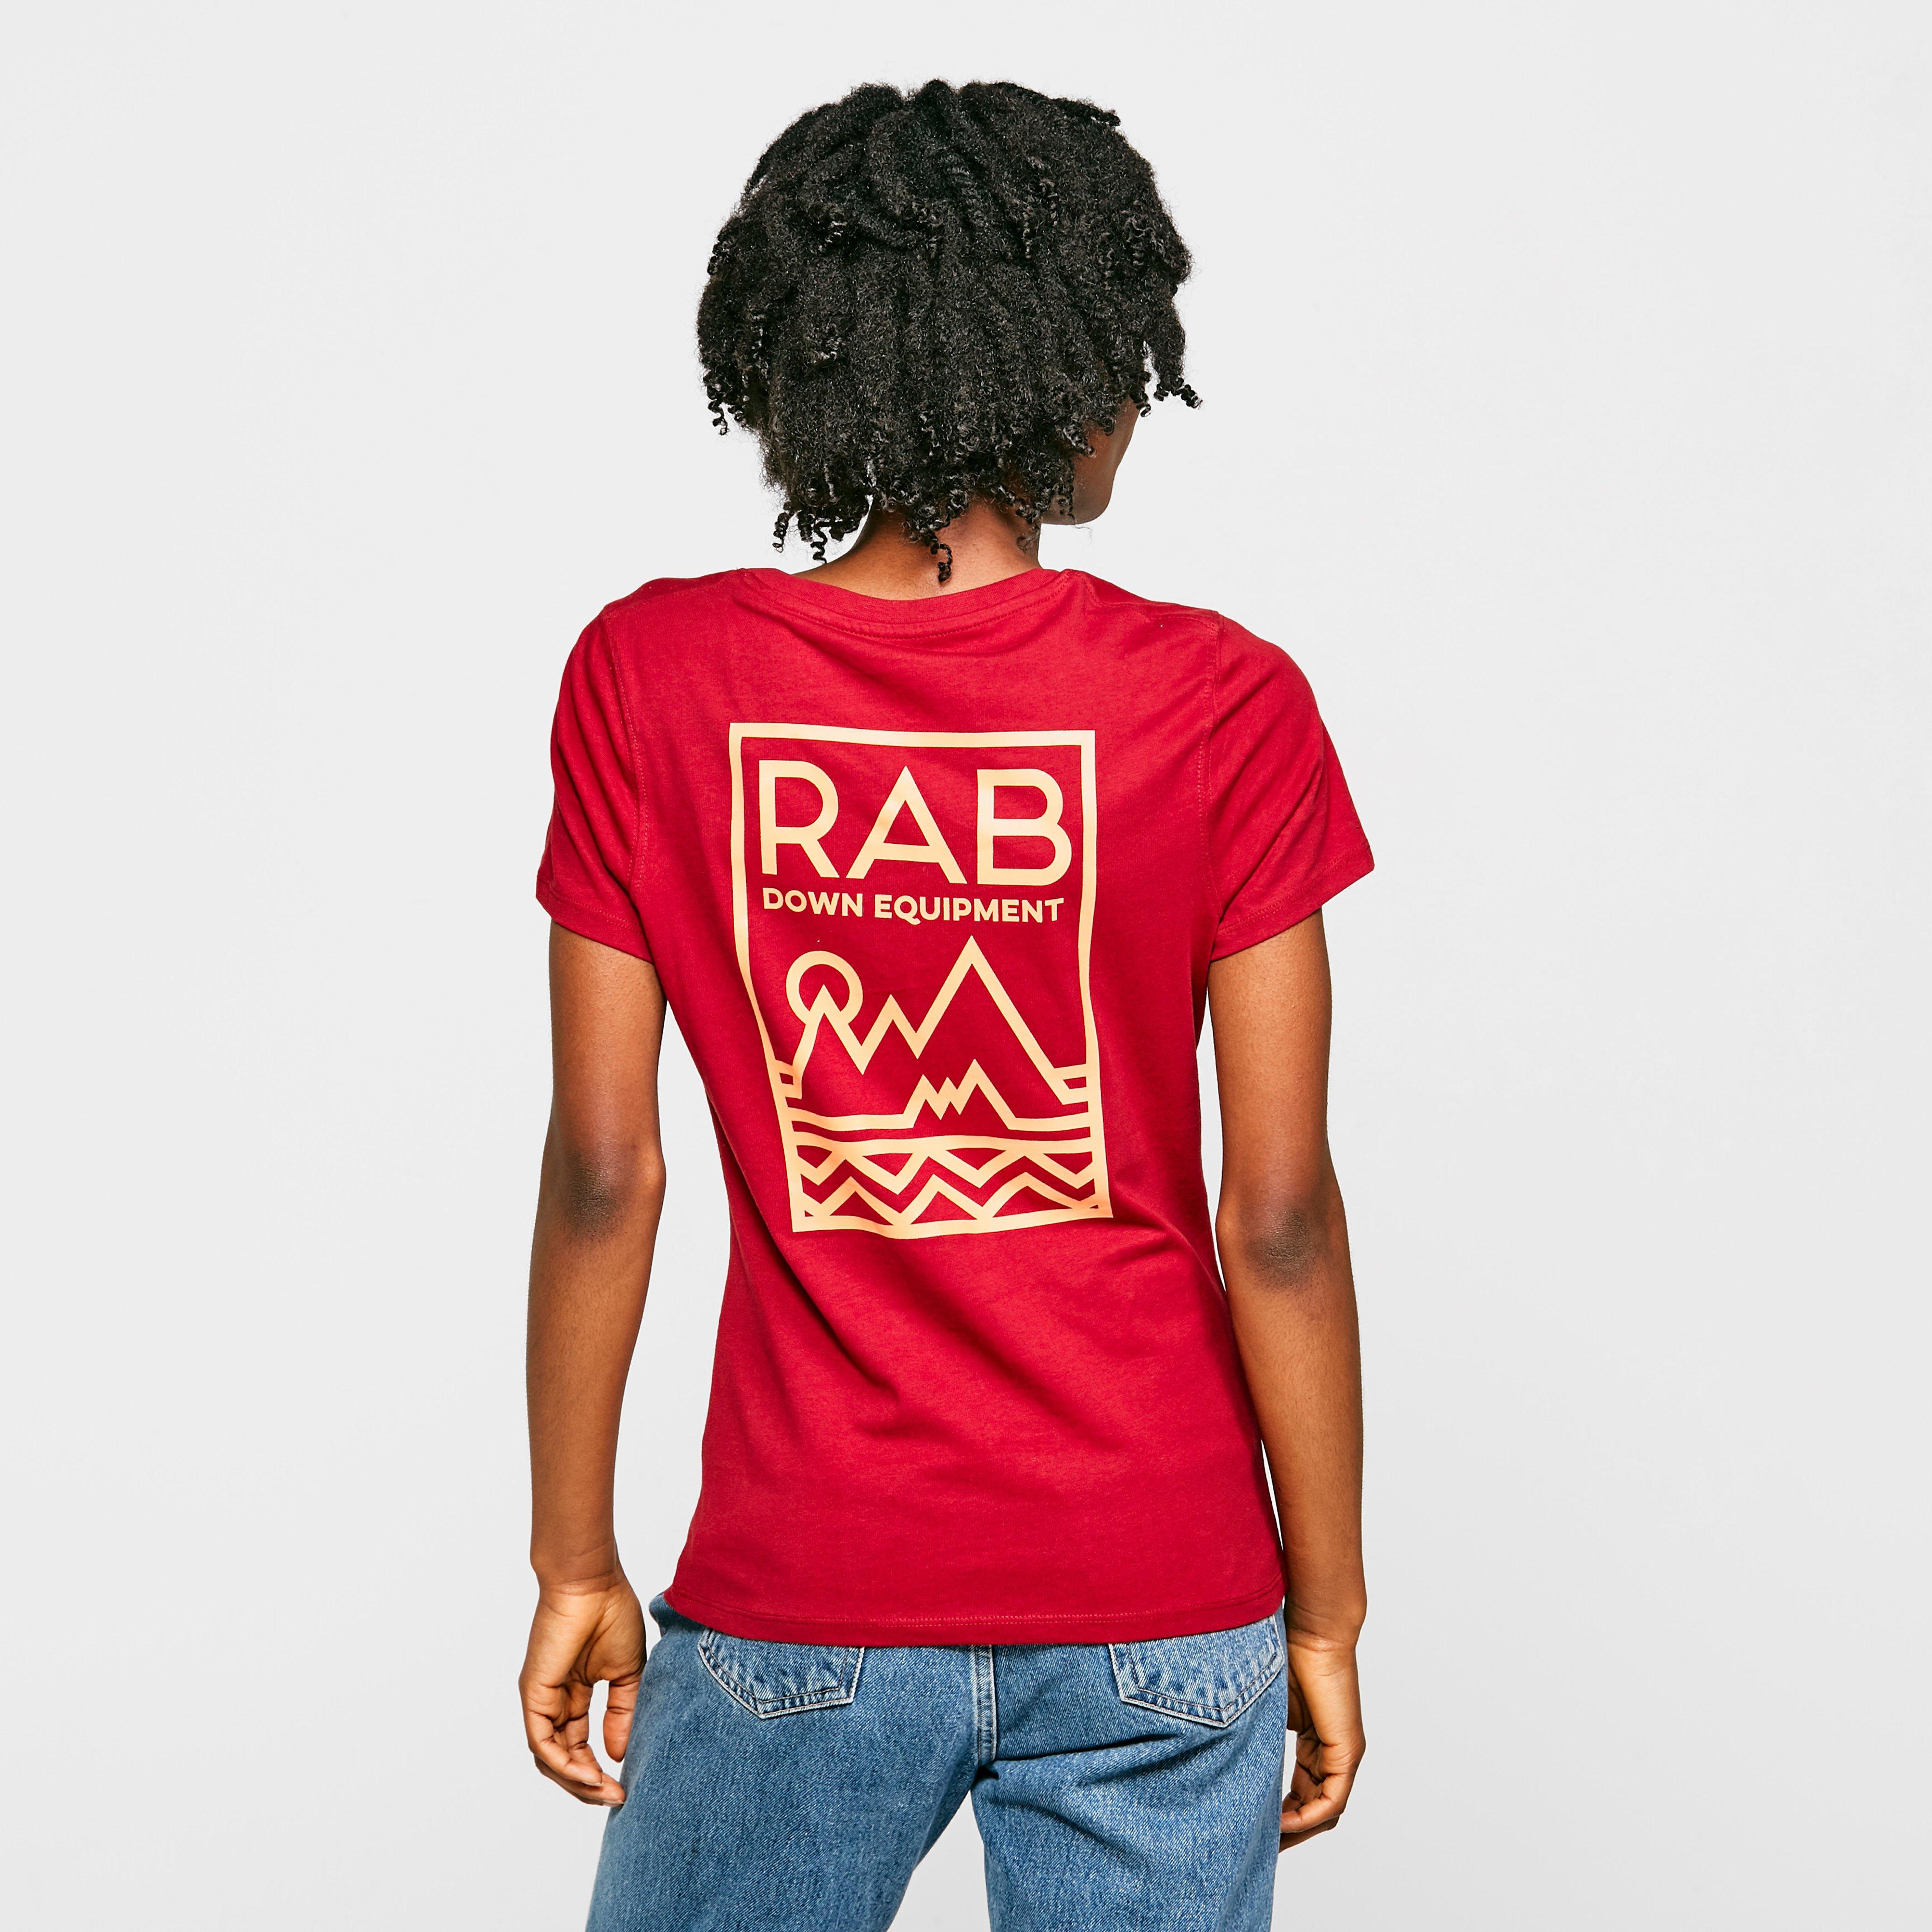 Rab Women's Stance Geo T-Shirt Review